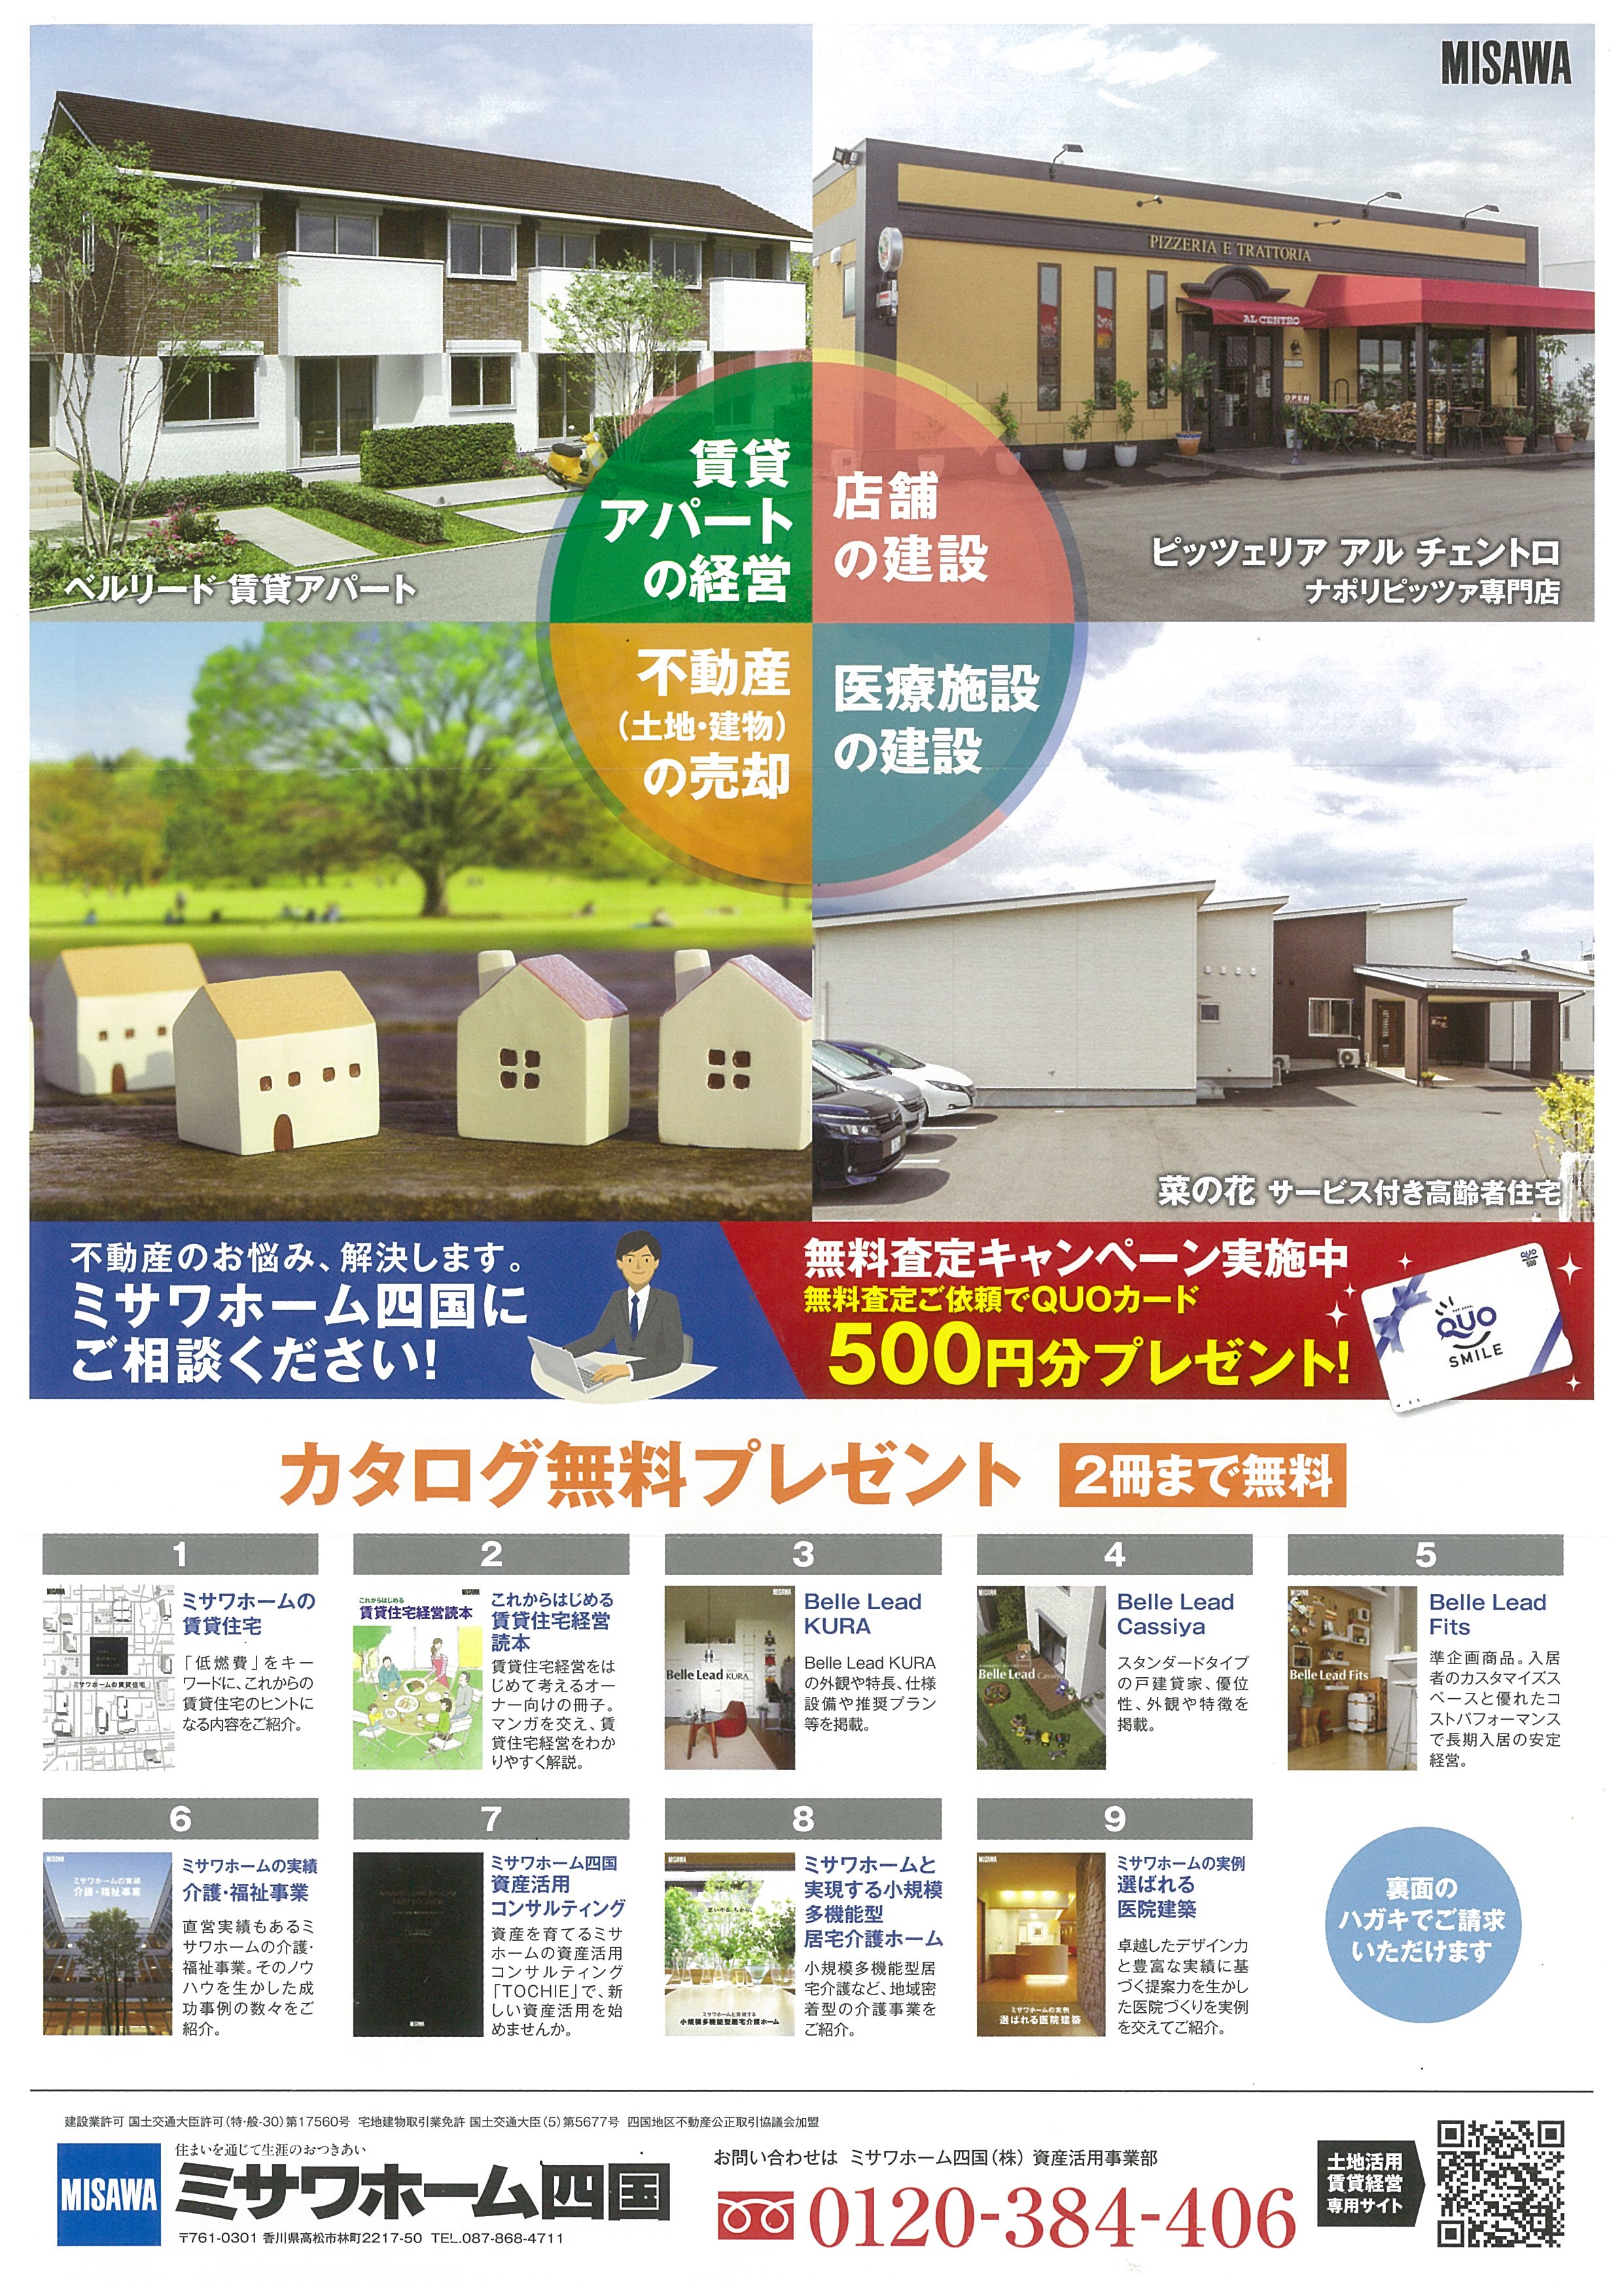 http://shikoku.misawa.co.jp/area_kouchi/%E7%89%B9%E5%BB%BA.jpg